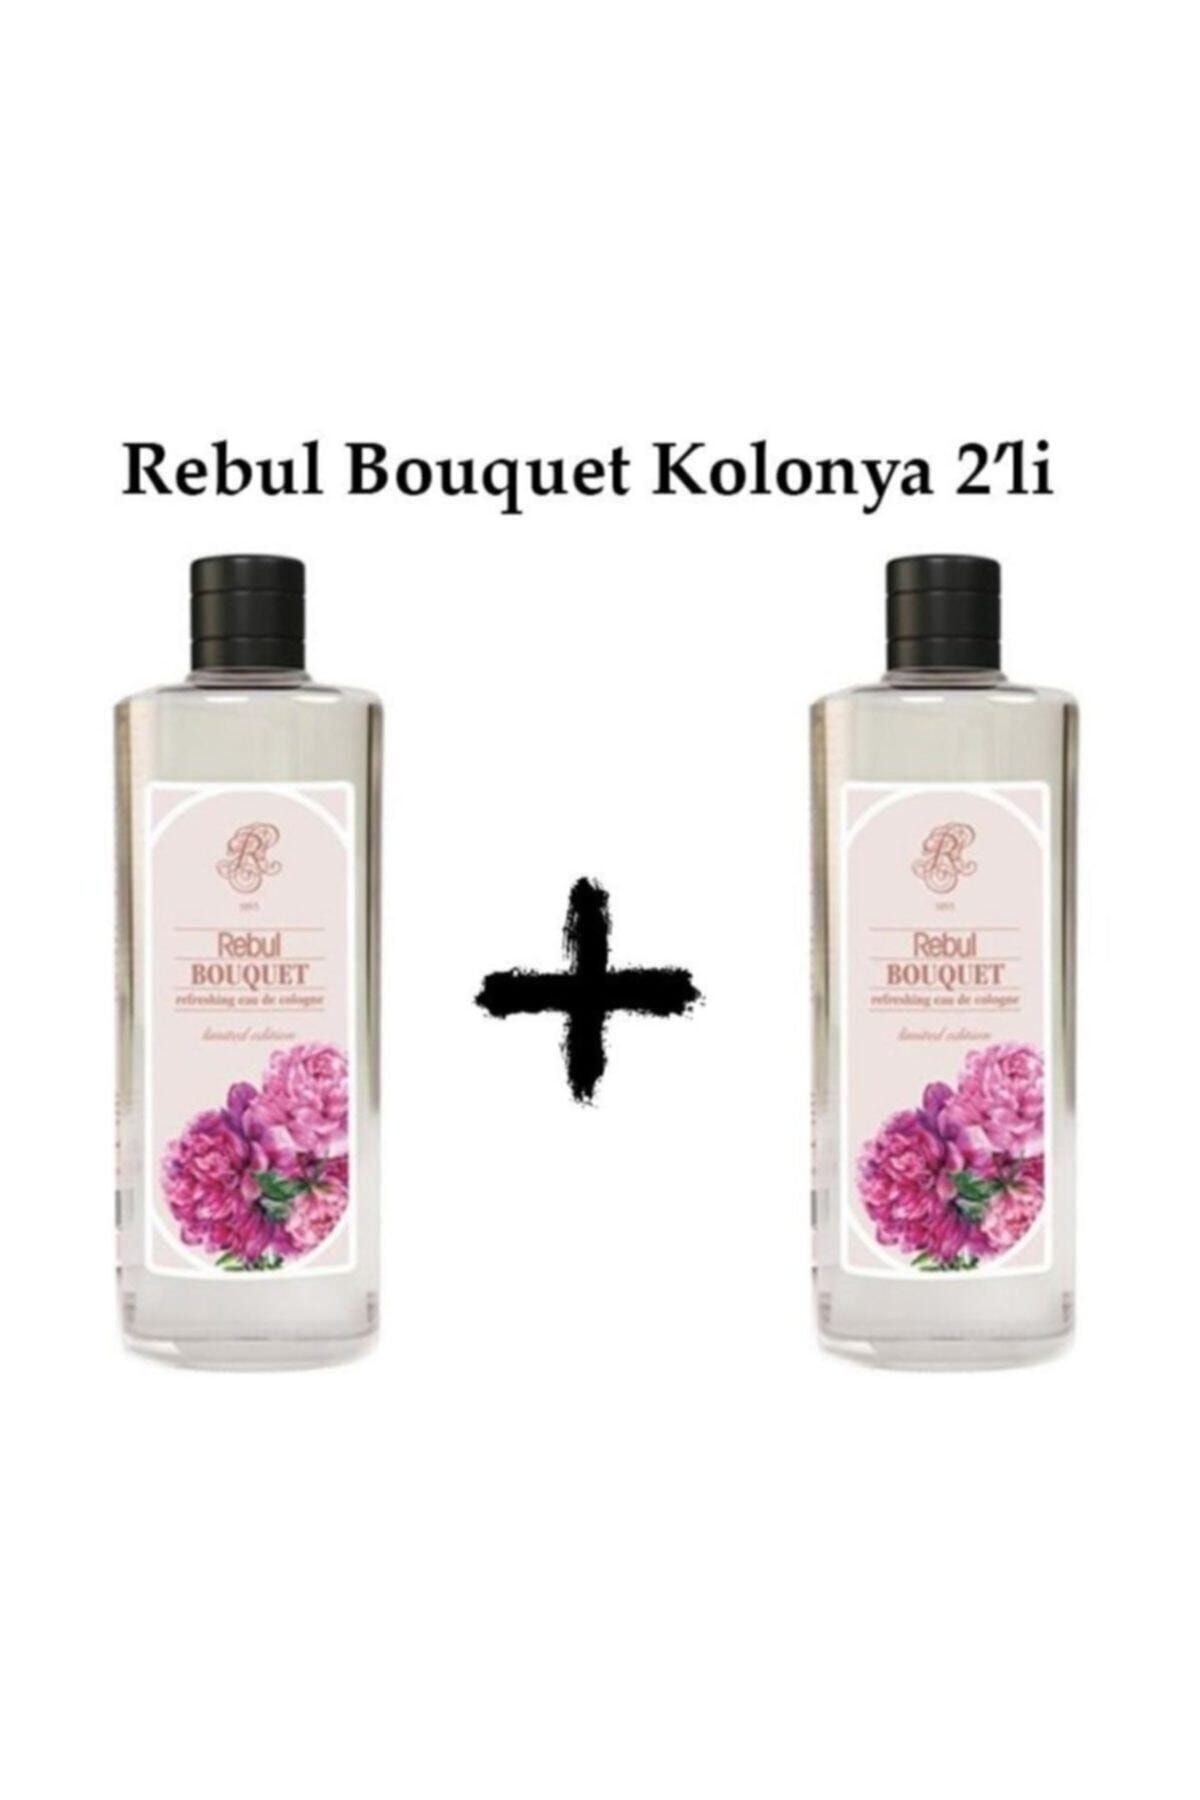 Rebul Bouquet Kolonya 270 Ml 2 Adet